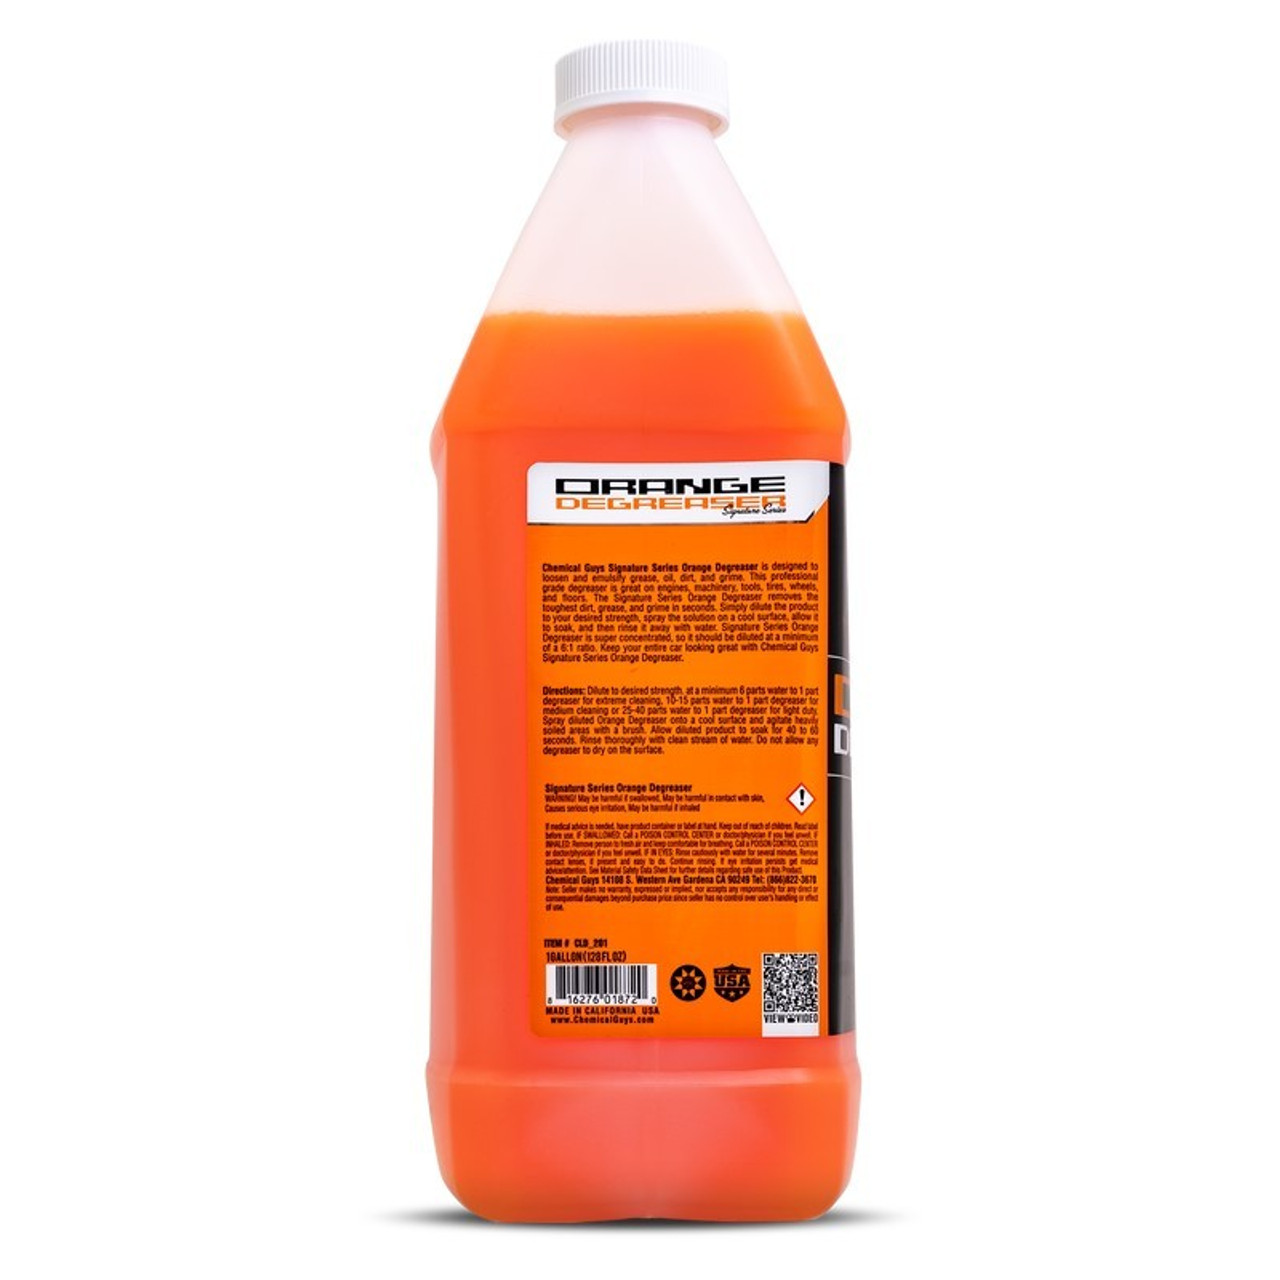 Chemical Guys Signature Series Orange Degreaser - 1 Gallon - Label